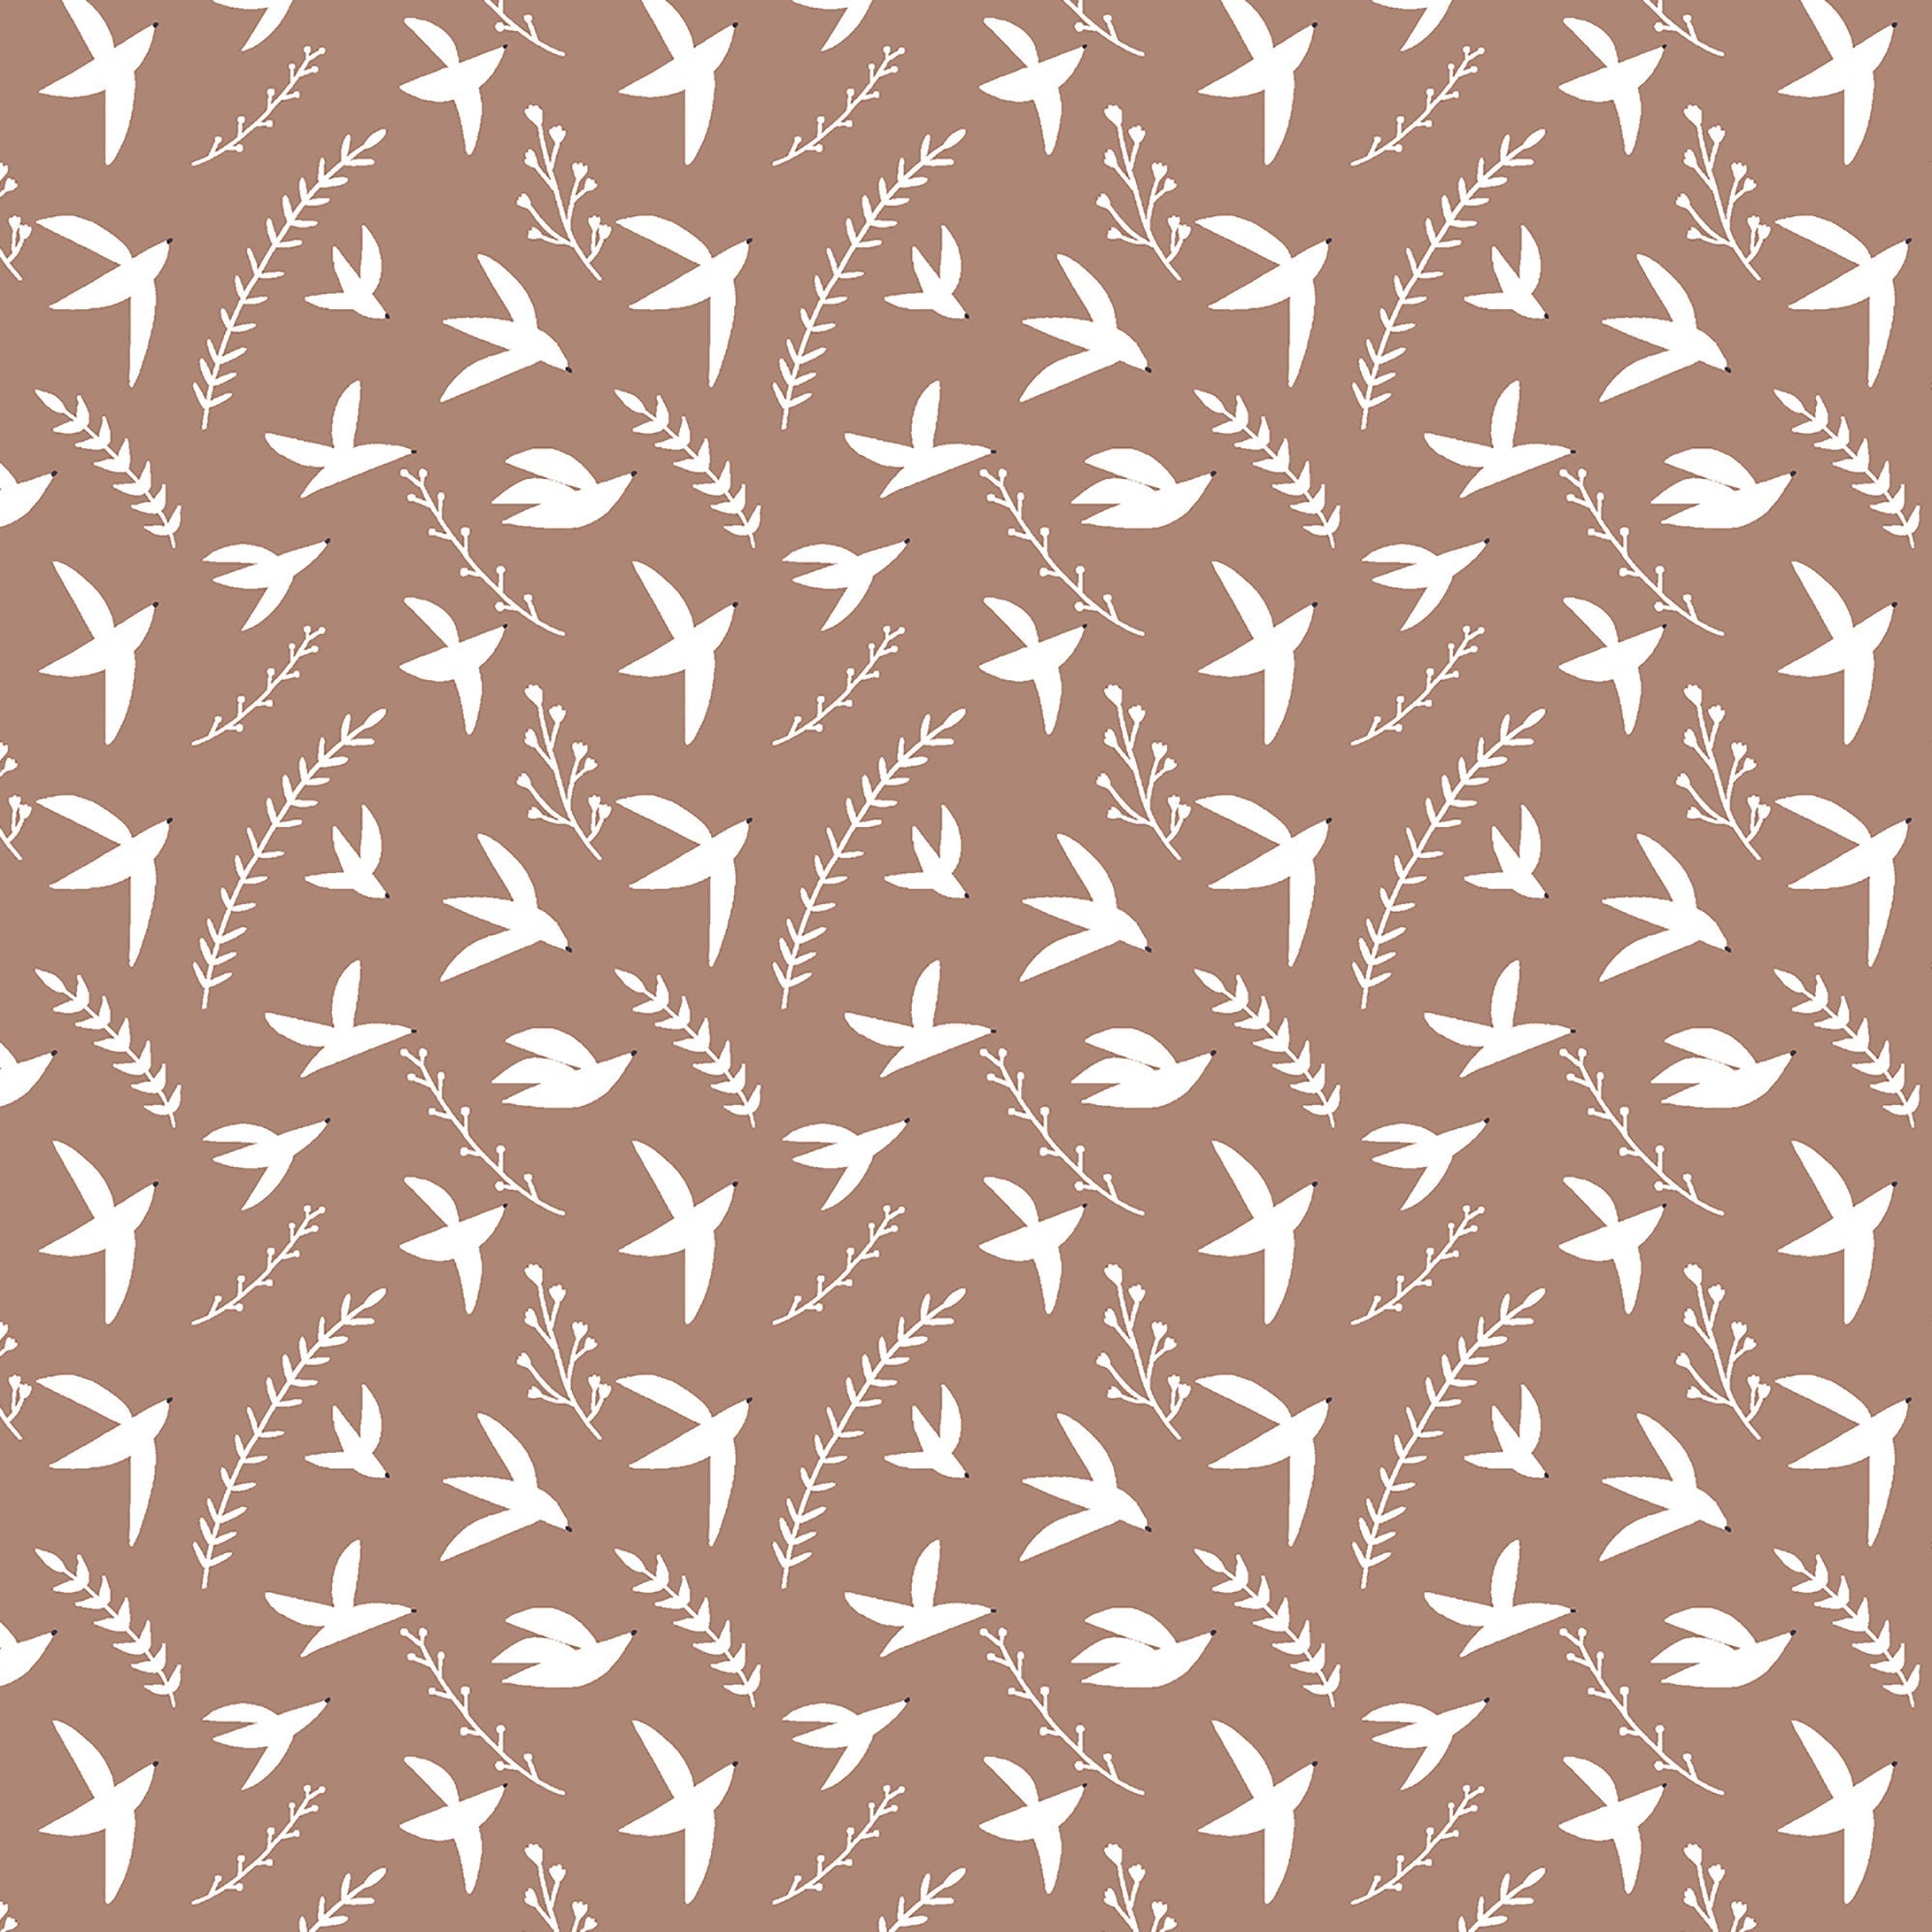 Pond Life - Birds in Flight Truffle Fabric